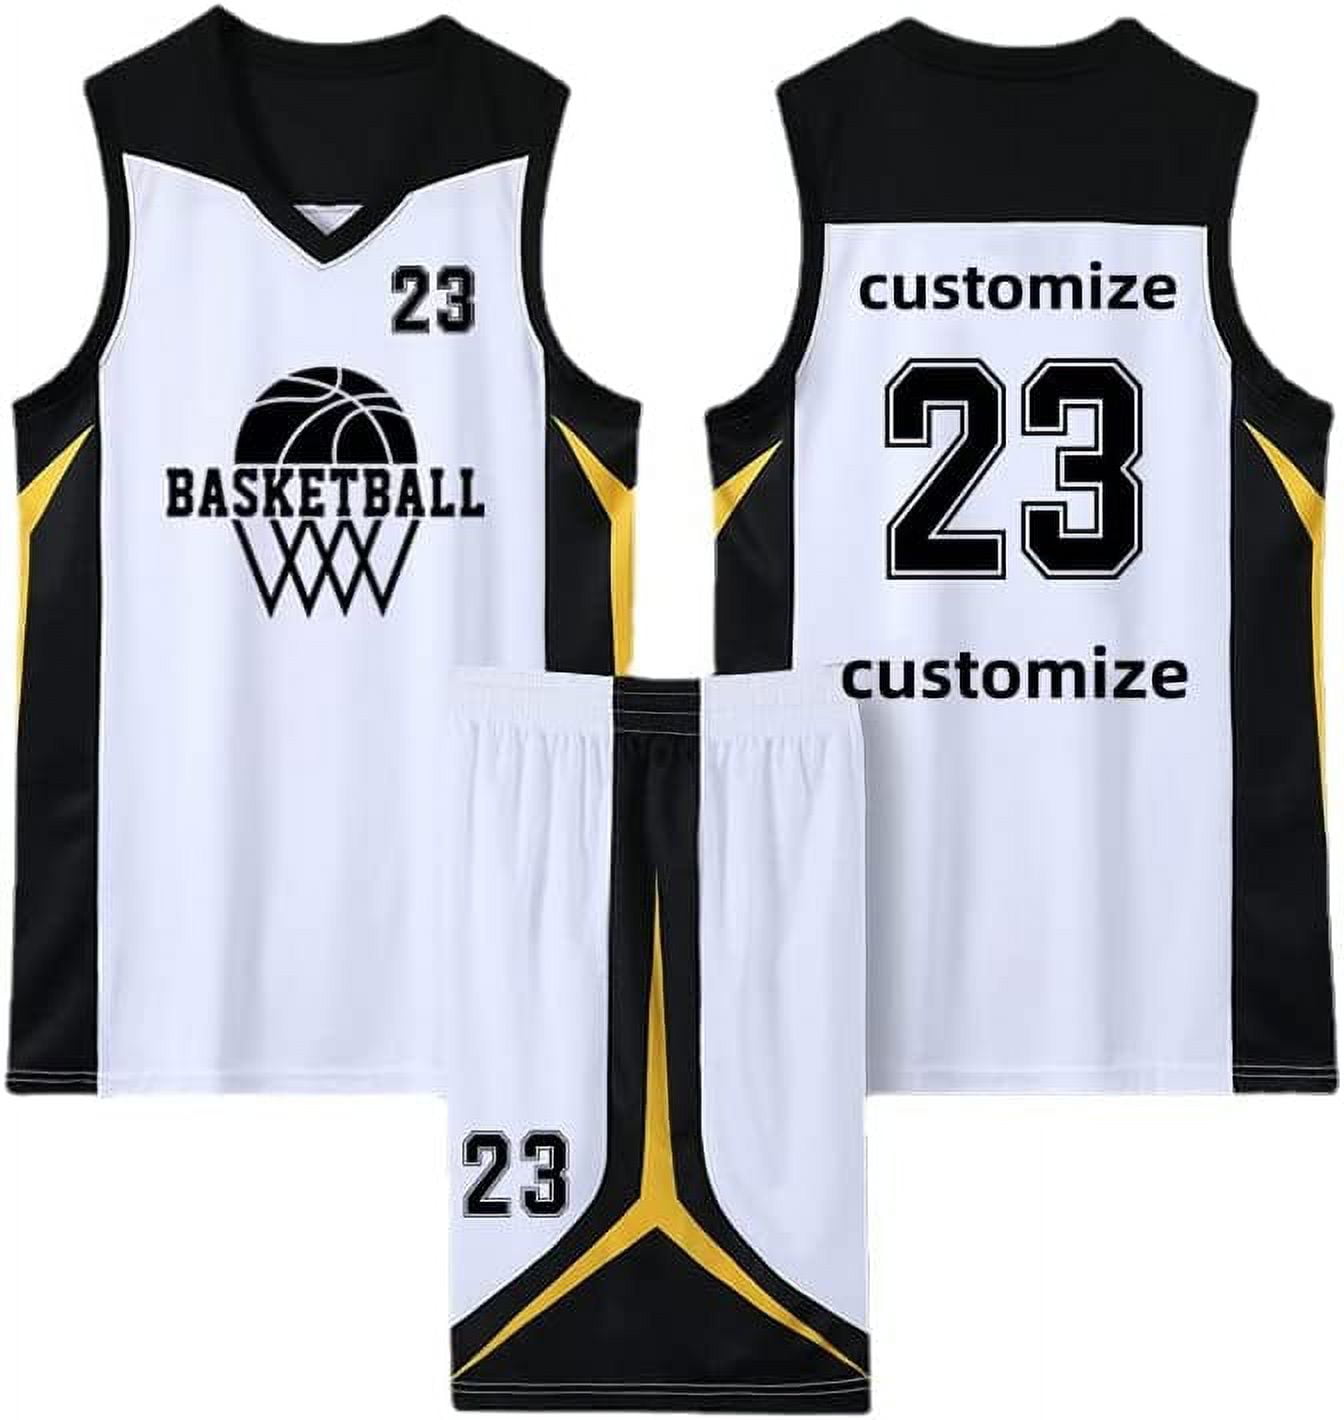 Wholesale Black gold basketball jerseys hot sell basketball wear